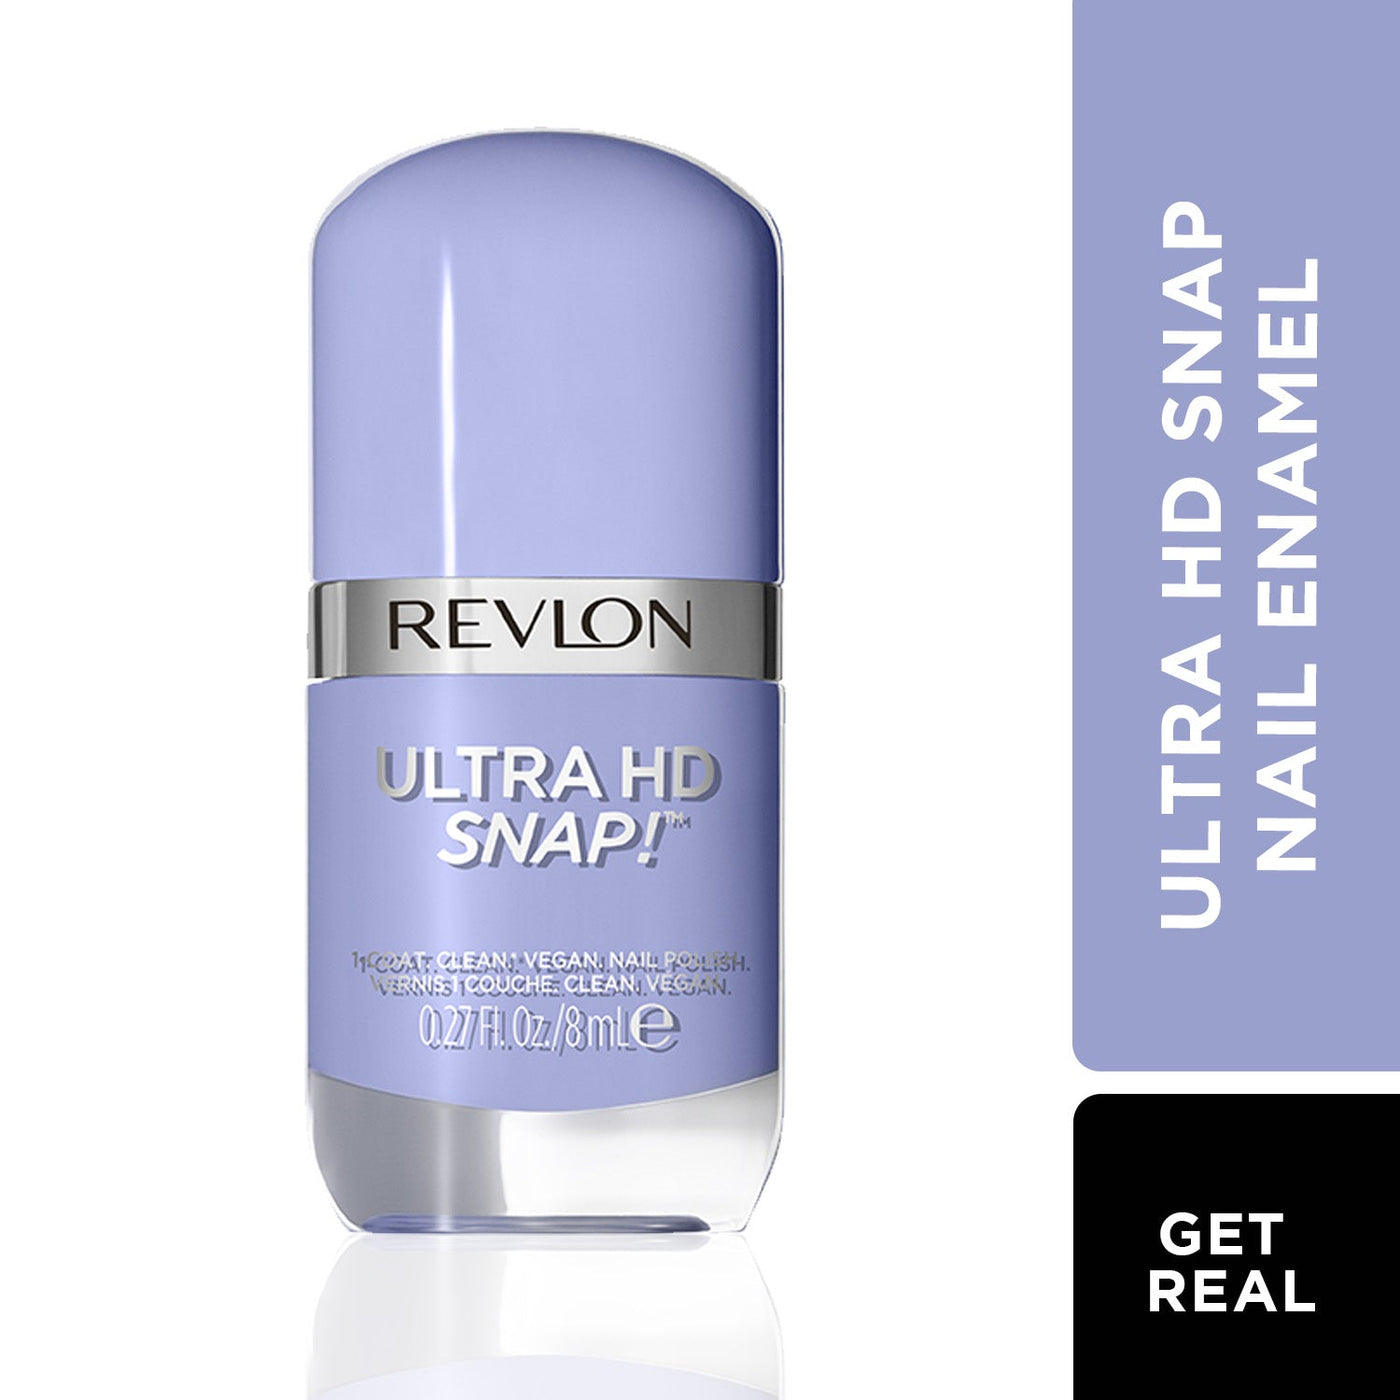 Revlon Ultra HD Snap Nail Polish-Special Offer